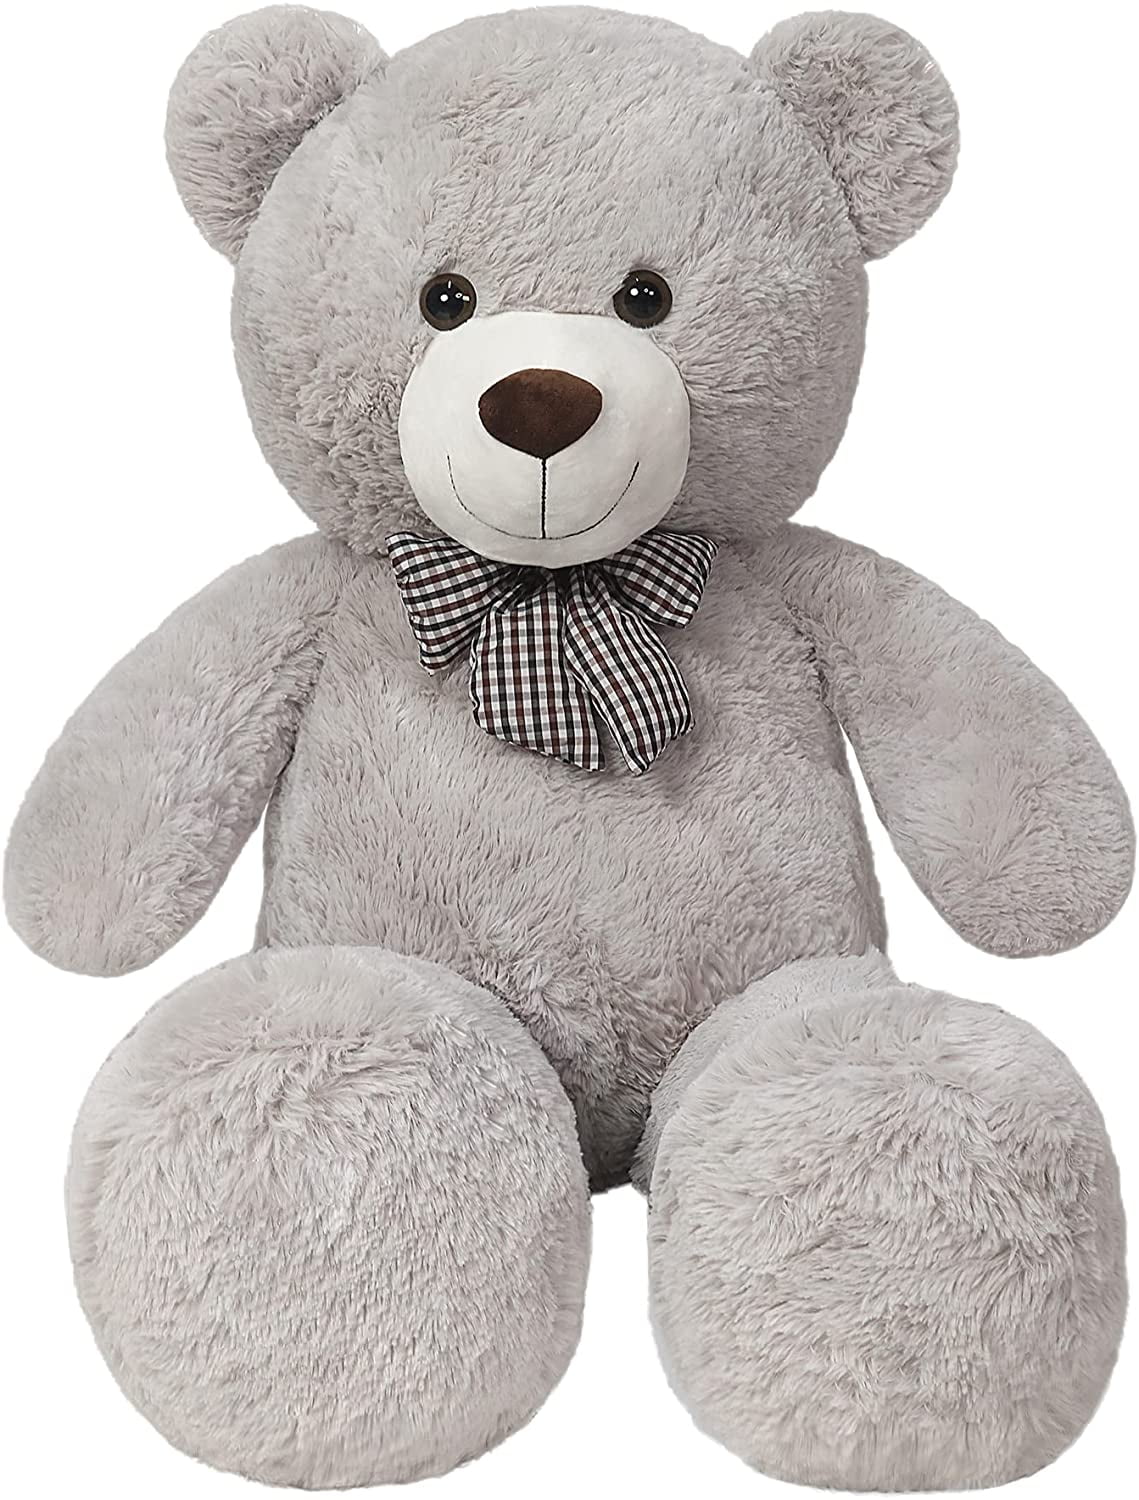 Giant Teddy Bear 4ft Big Teedy Bear Stuffed Animals Plush Toy Soft Bear White 